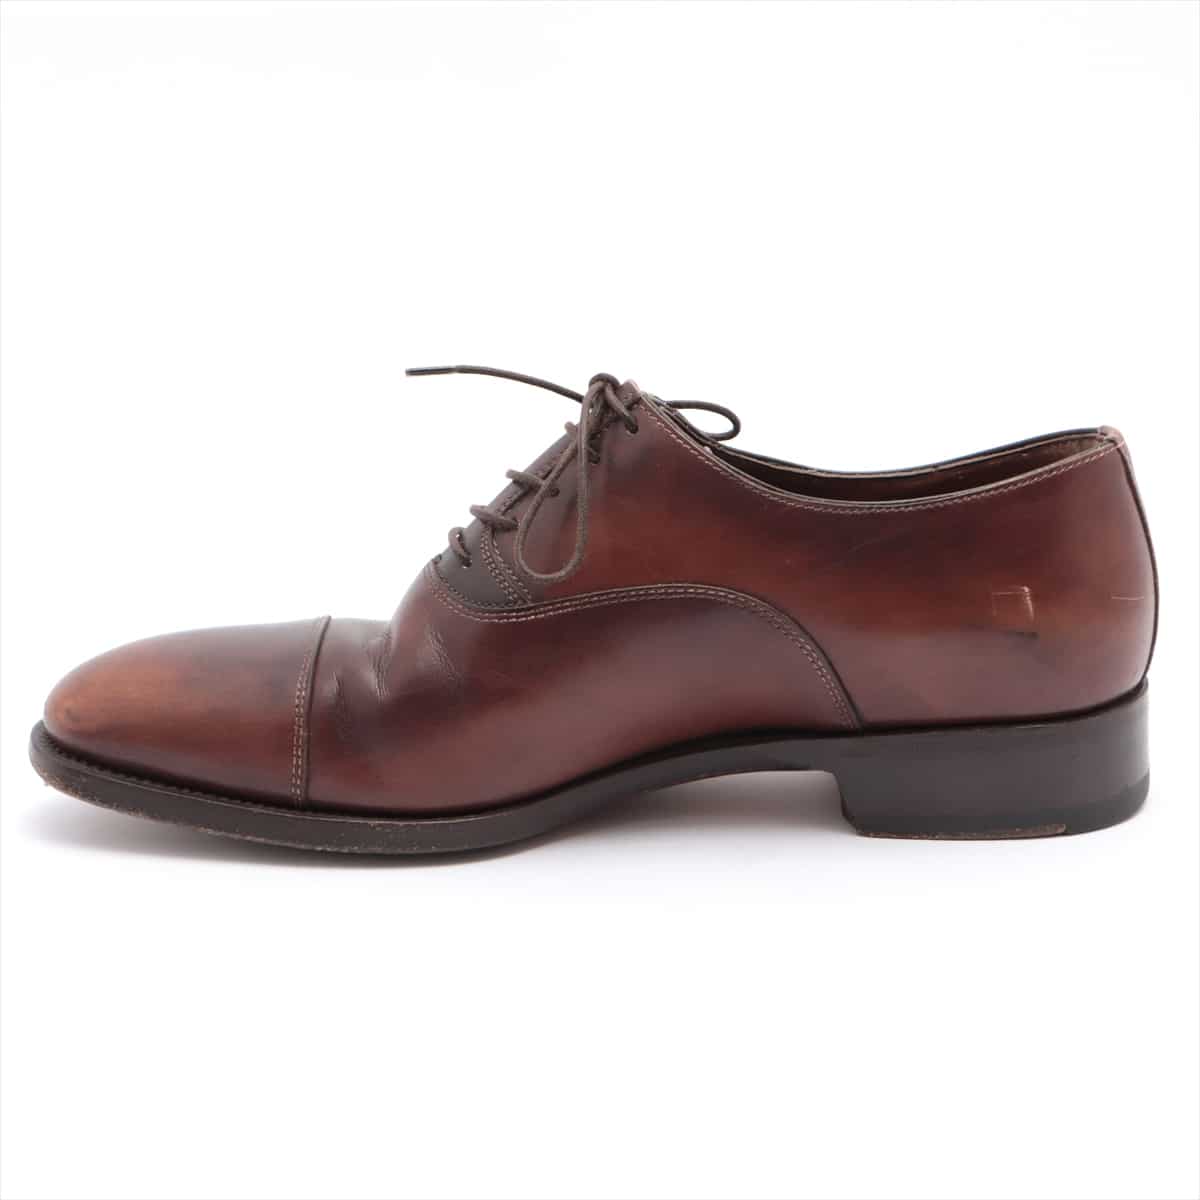 Santoni Leather Leather shoes 5.5 Men's Brown